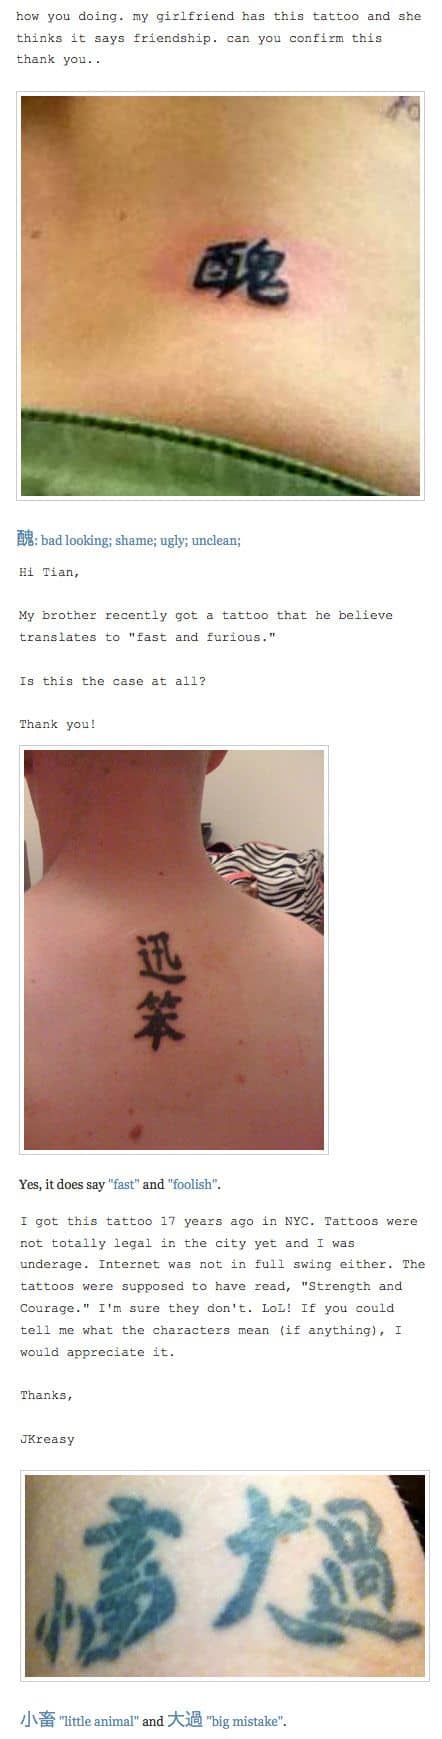 ¿Qué significa mi tatuaje? Blogger traduce caracteres chinos